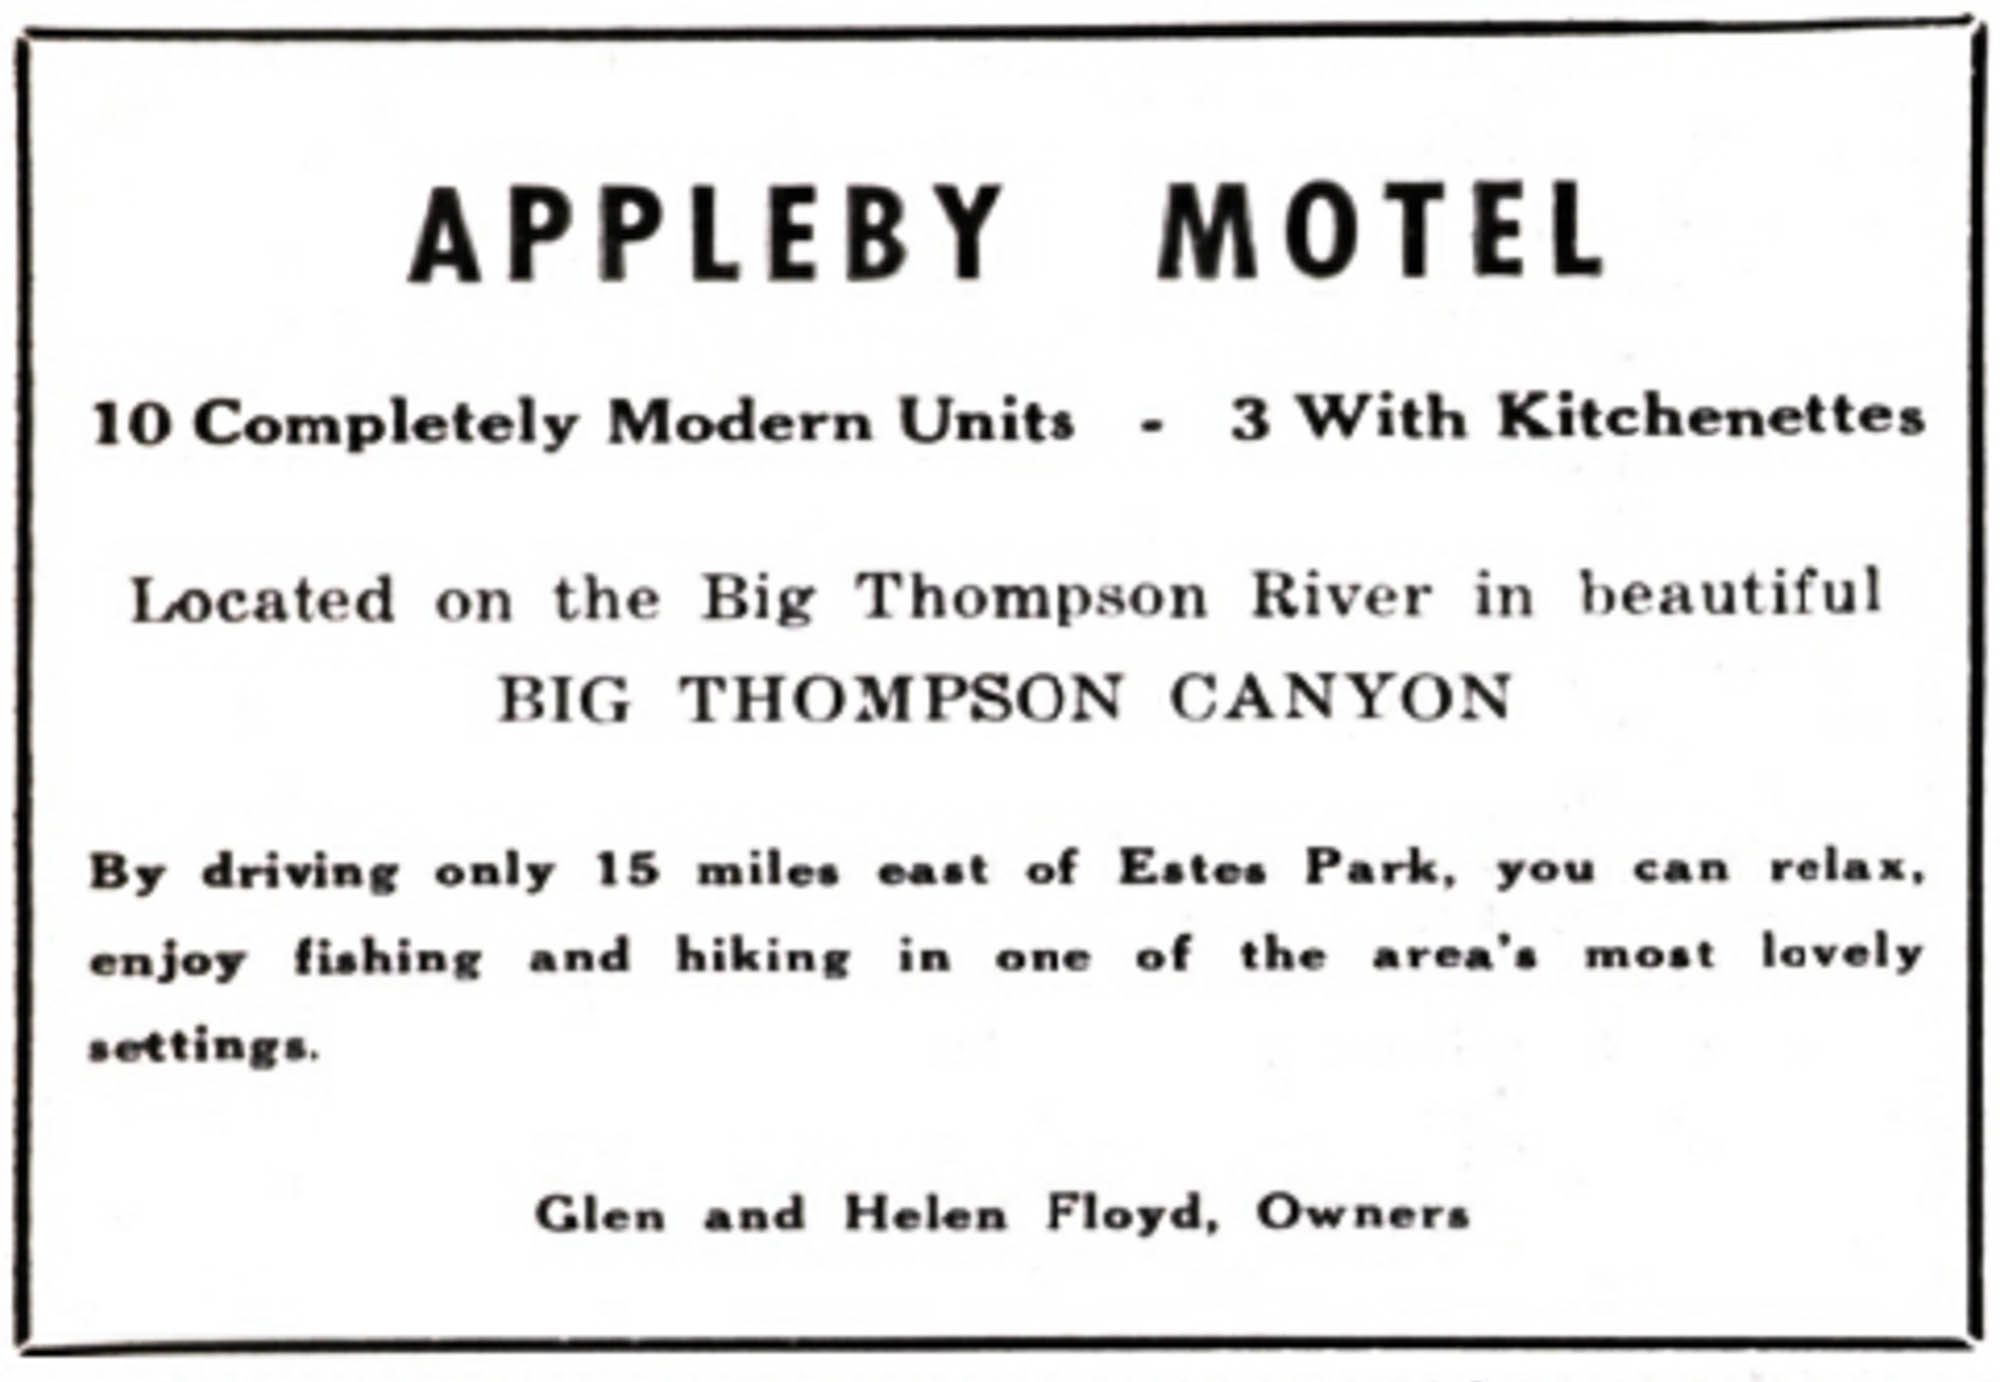 Idlewild Lodge - idlewildlodge.github.io - 1960-03-25 - The Estes Park Trail - Appleby Motel Advertisement